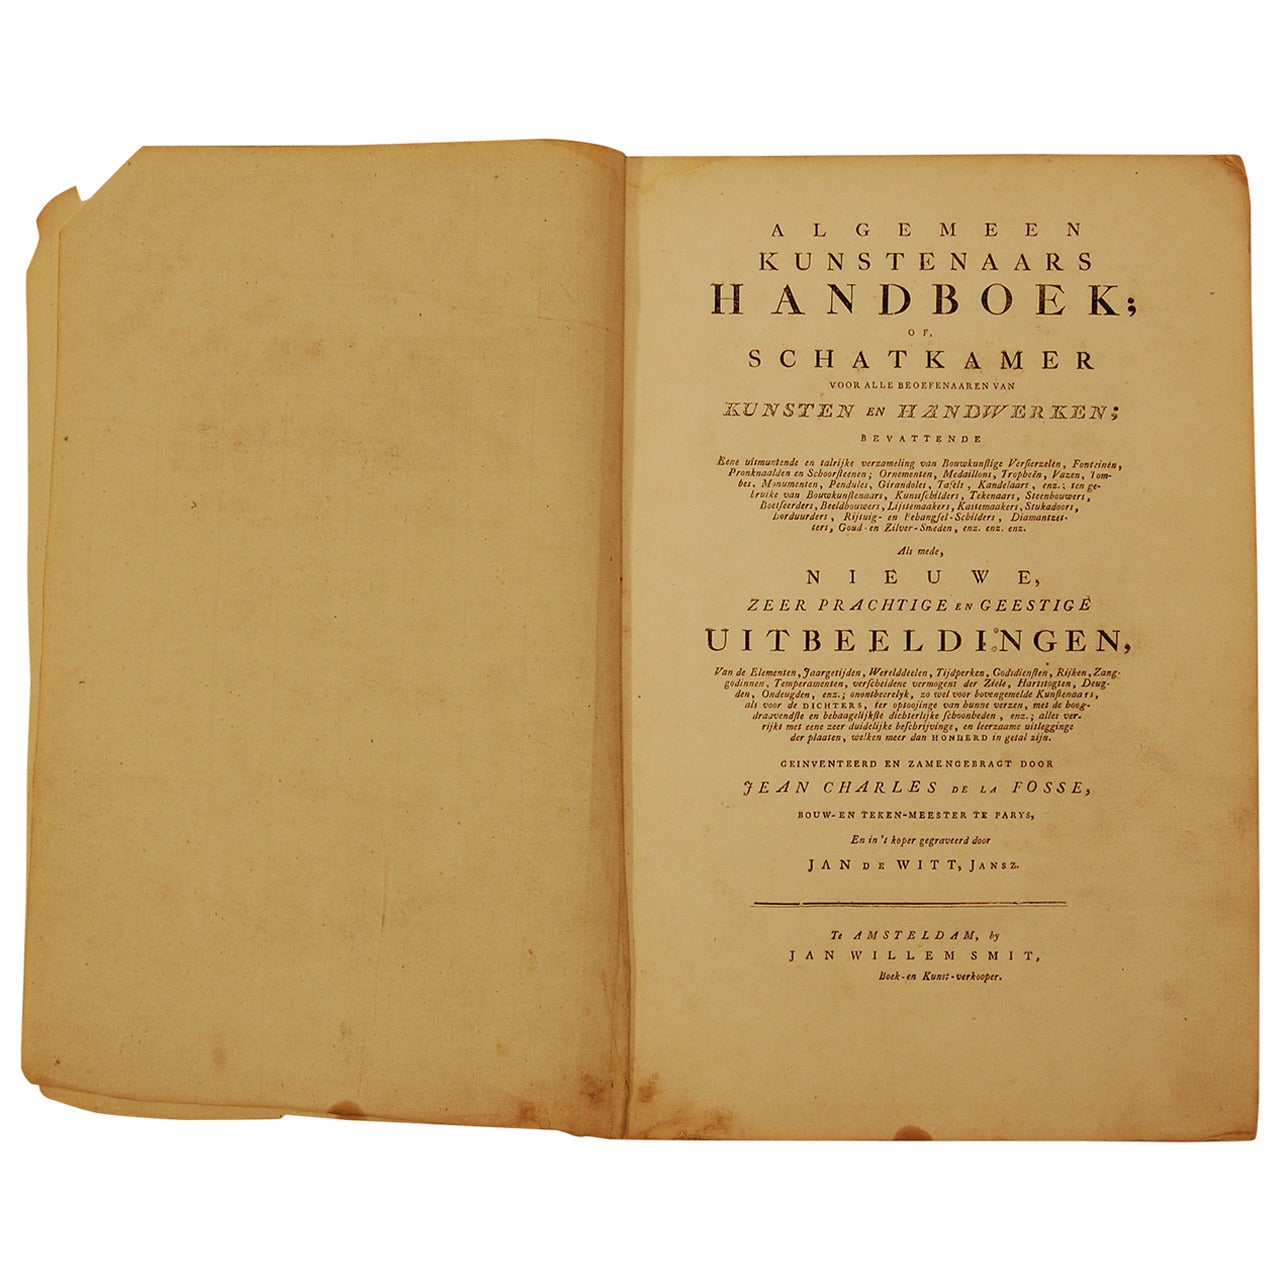 Antique Book, "General Artists Handbook of Treasury" For Sale